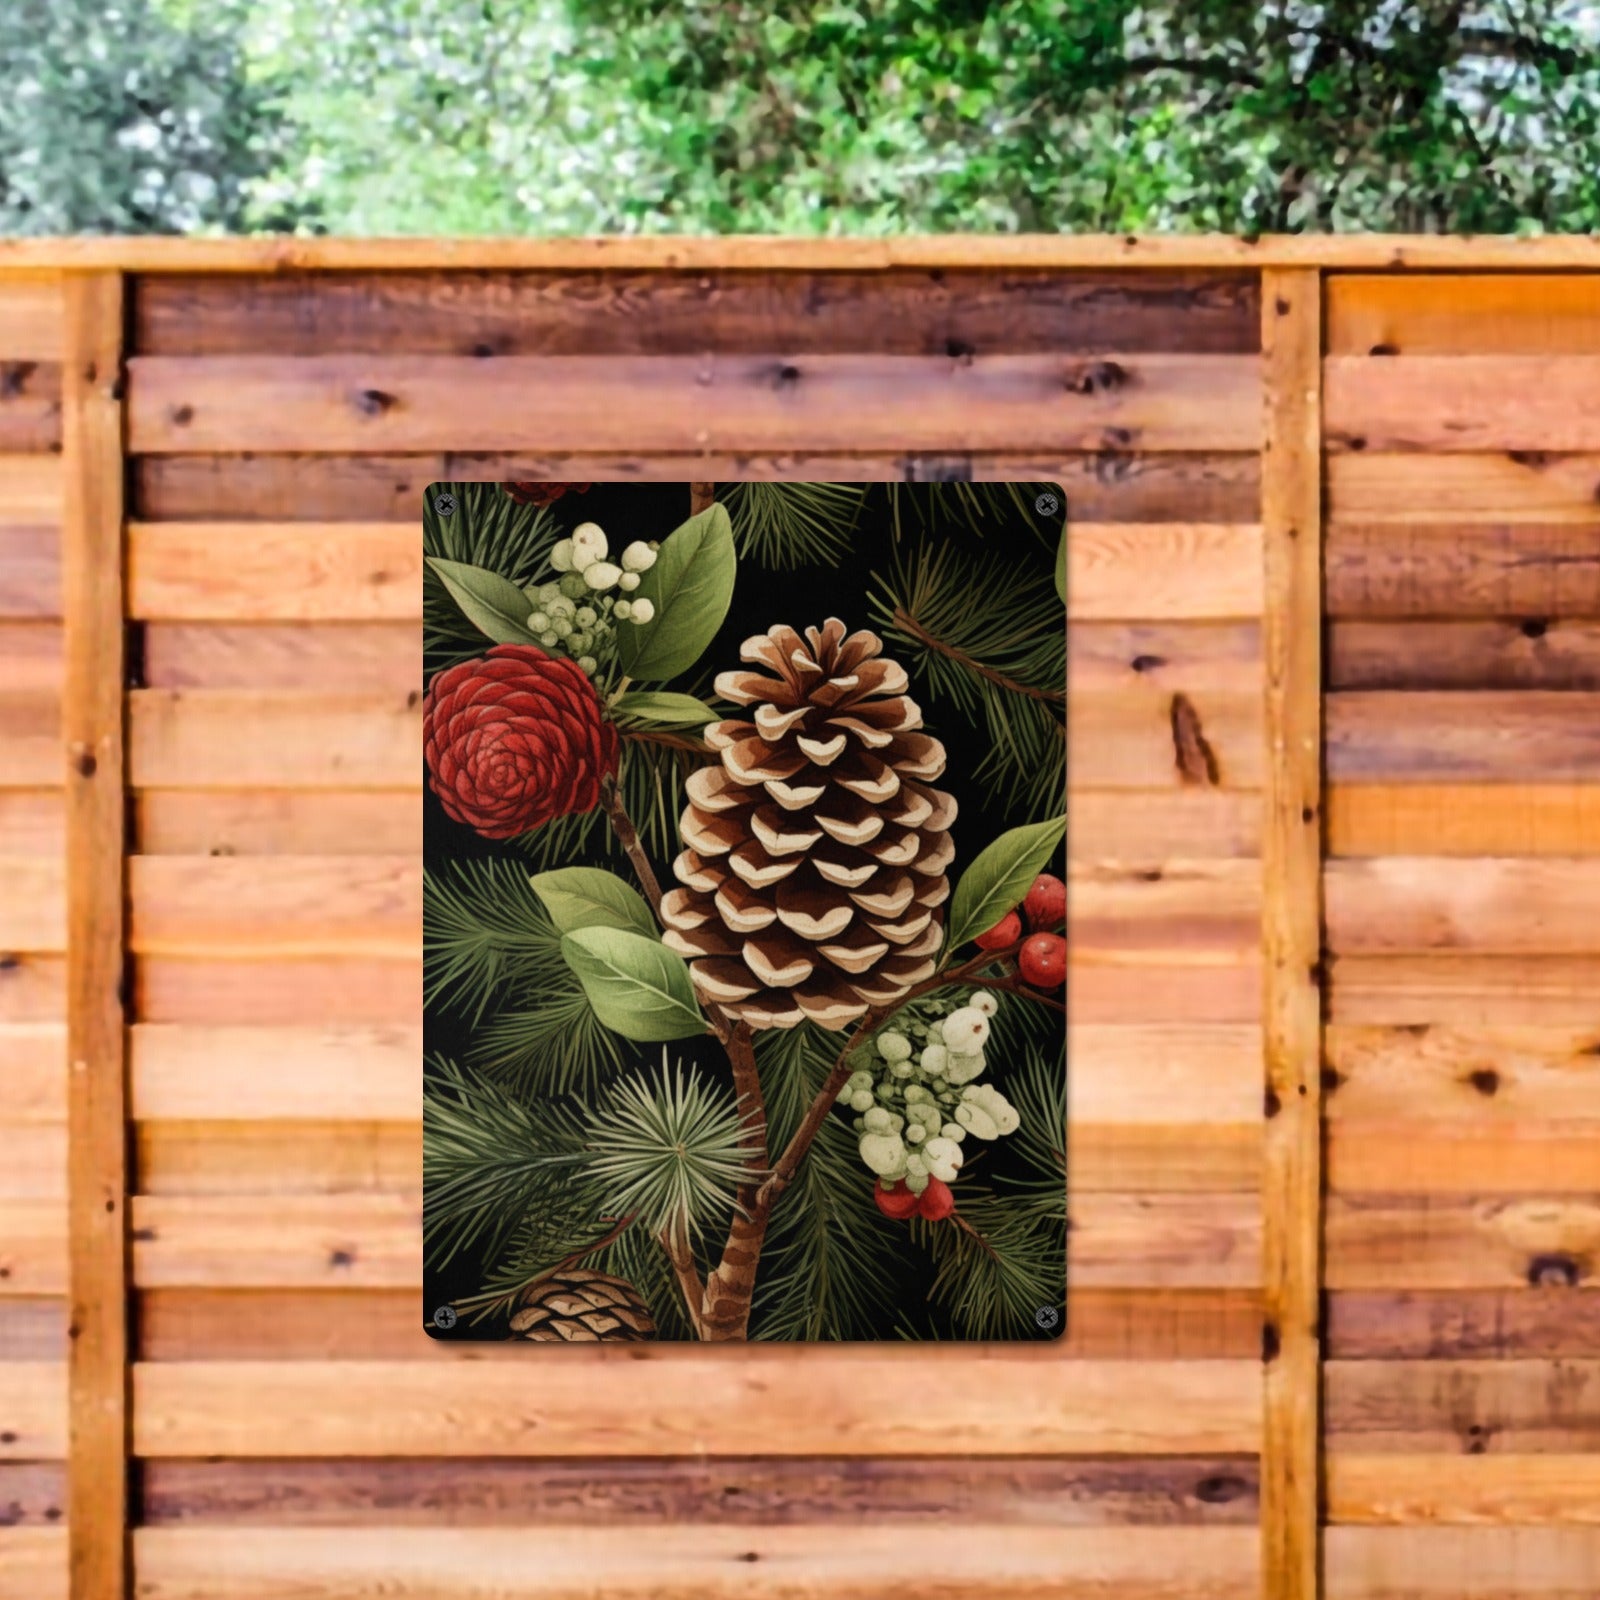 Rustic Lodge Home Decor Cabin Wall Art Poster Pine Cones Sign Indoor / Outdoor Metal Tin Sign 12"x16"